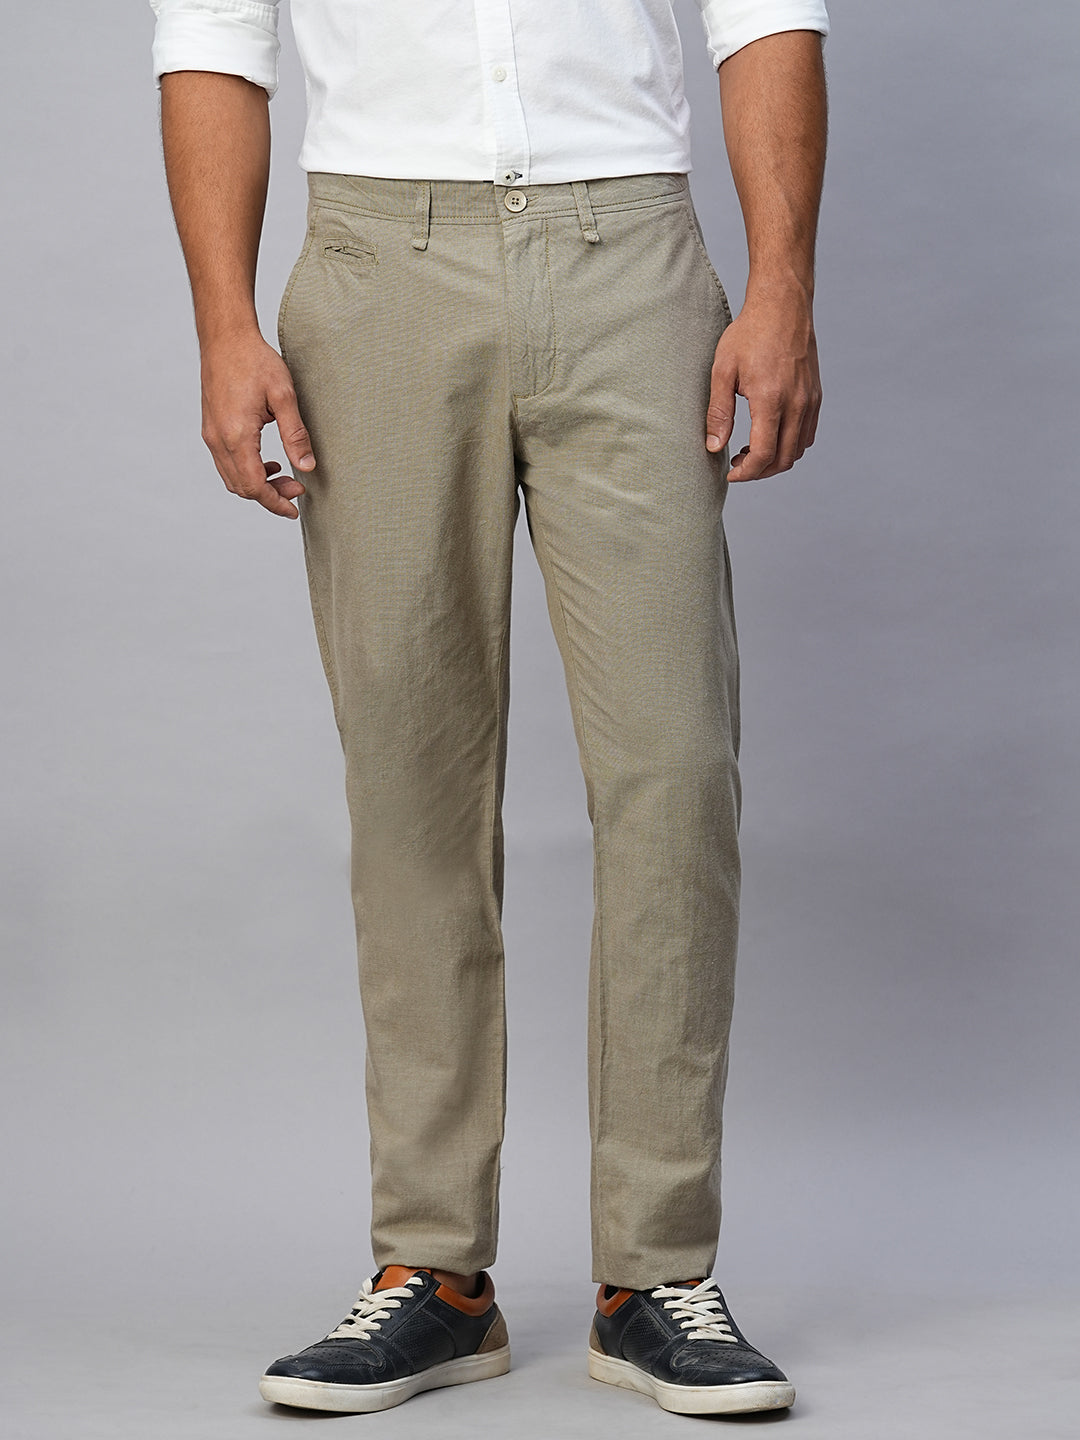 Men's Khaki Cotton Slim Fit Pant